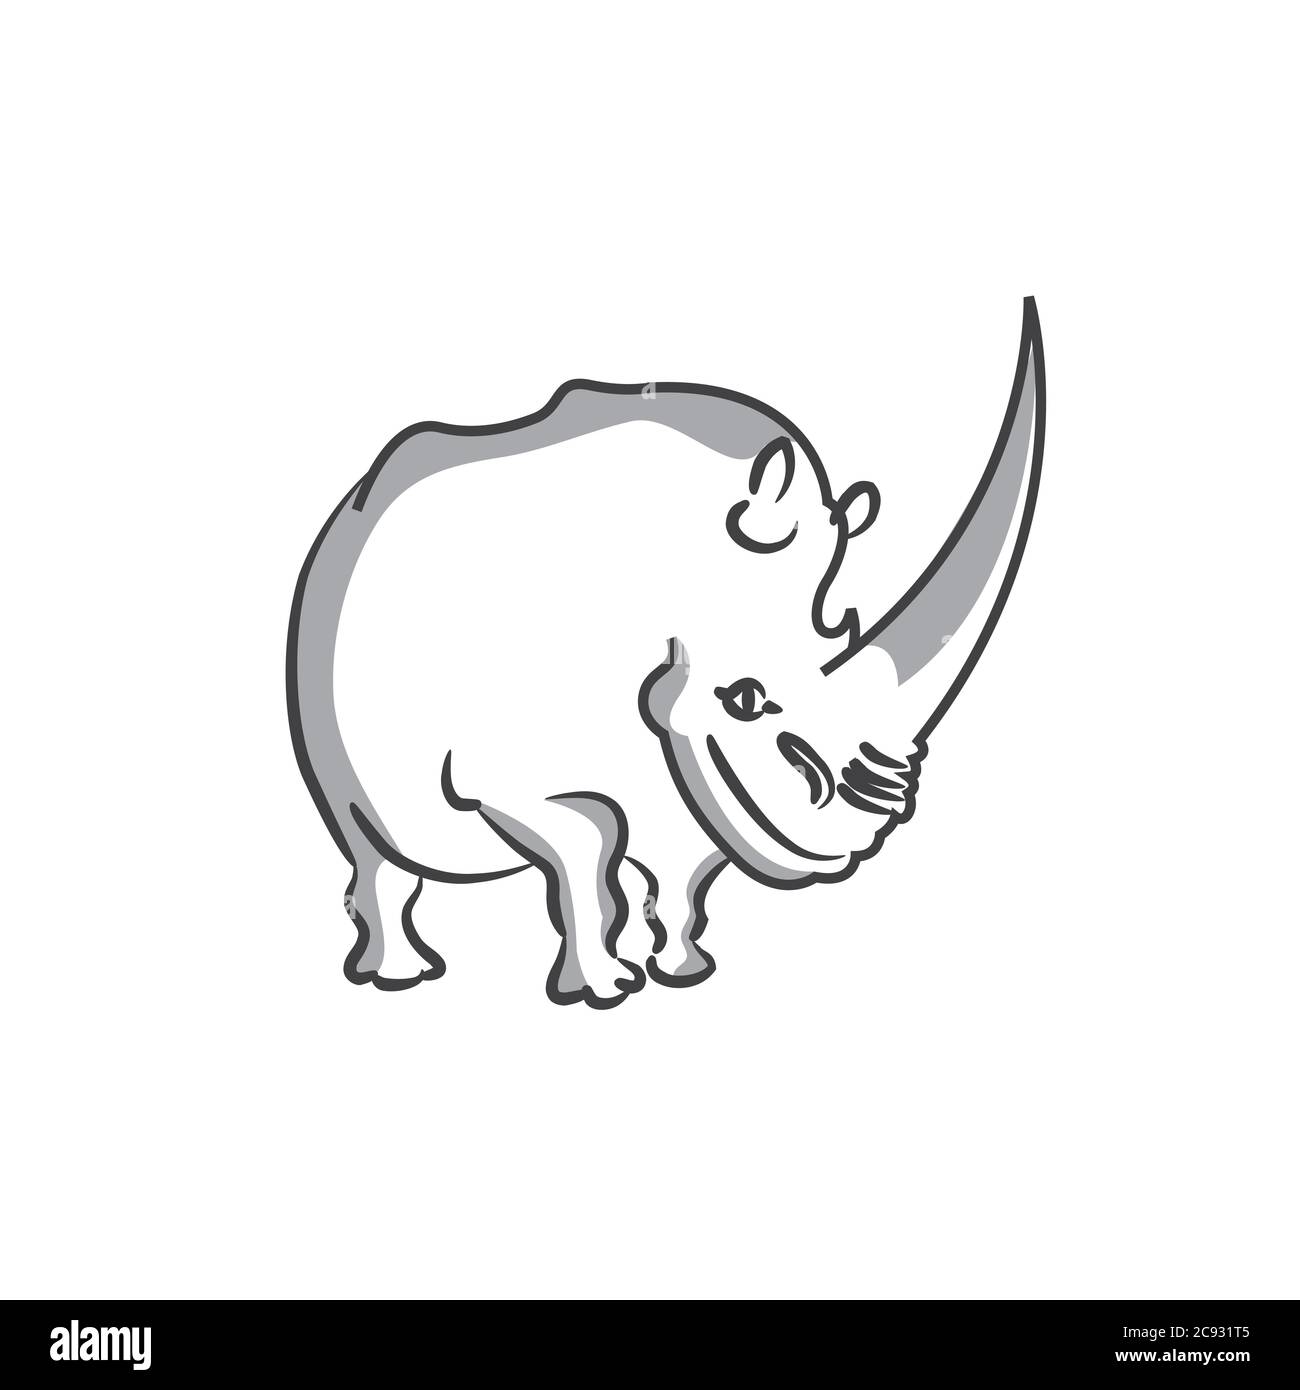 One line silhouette design of rhino.hand drawn minimalistic style vector illustration Stock Vector